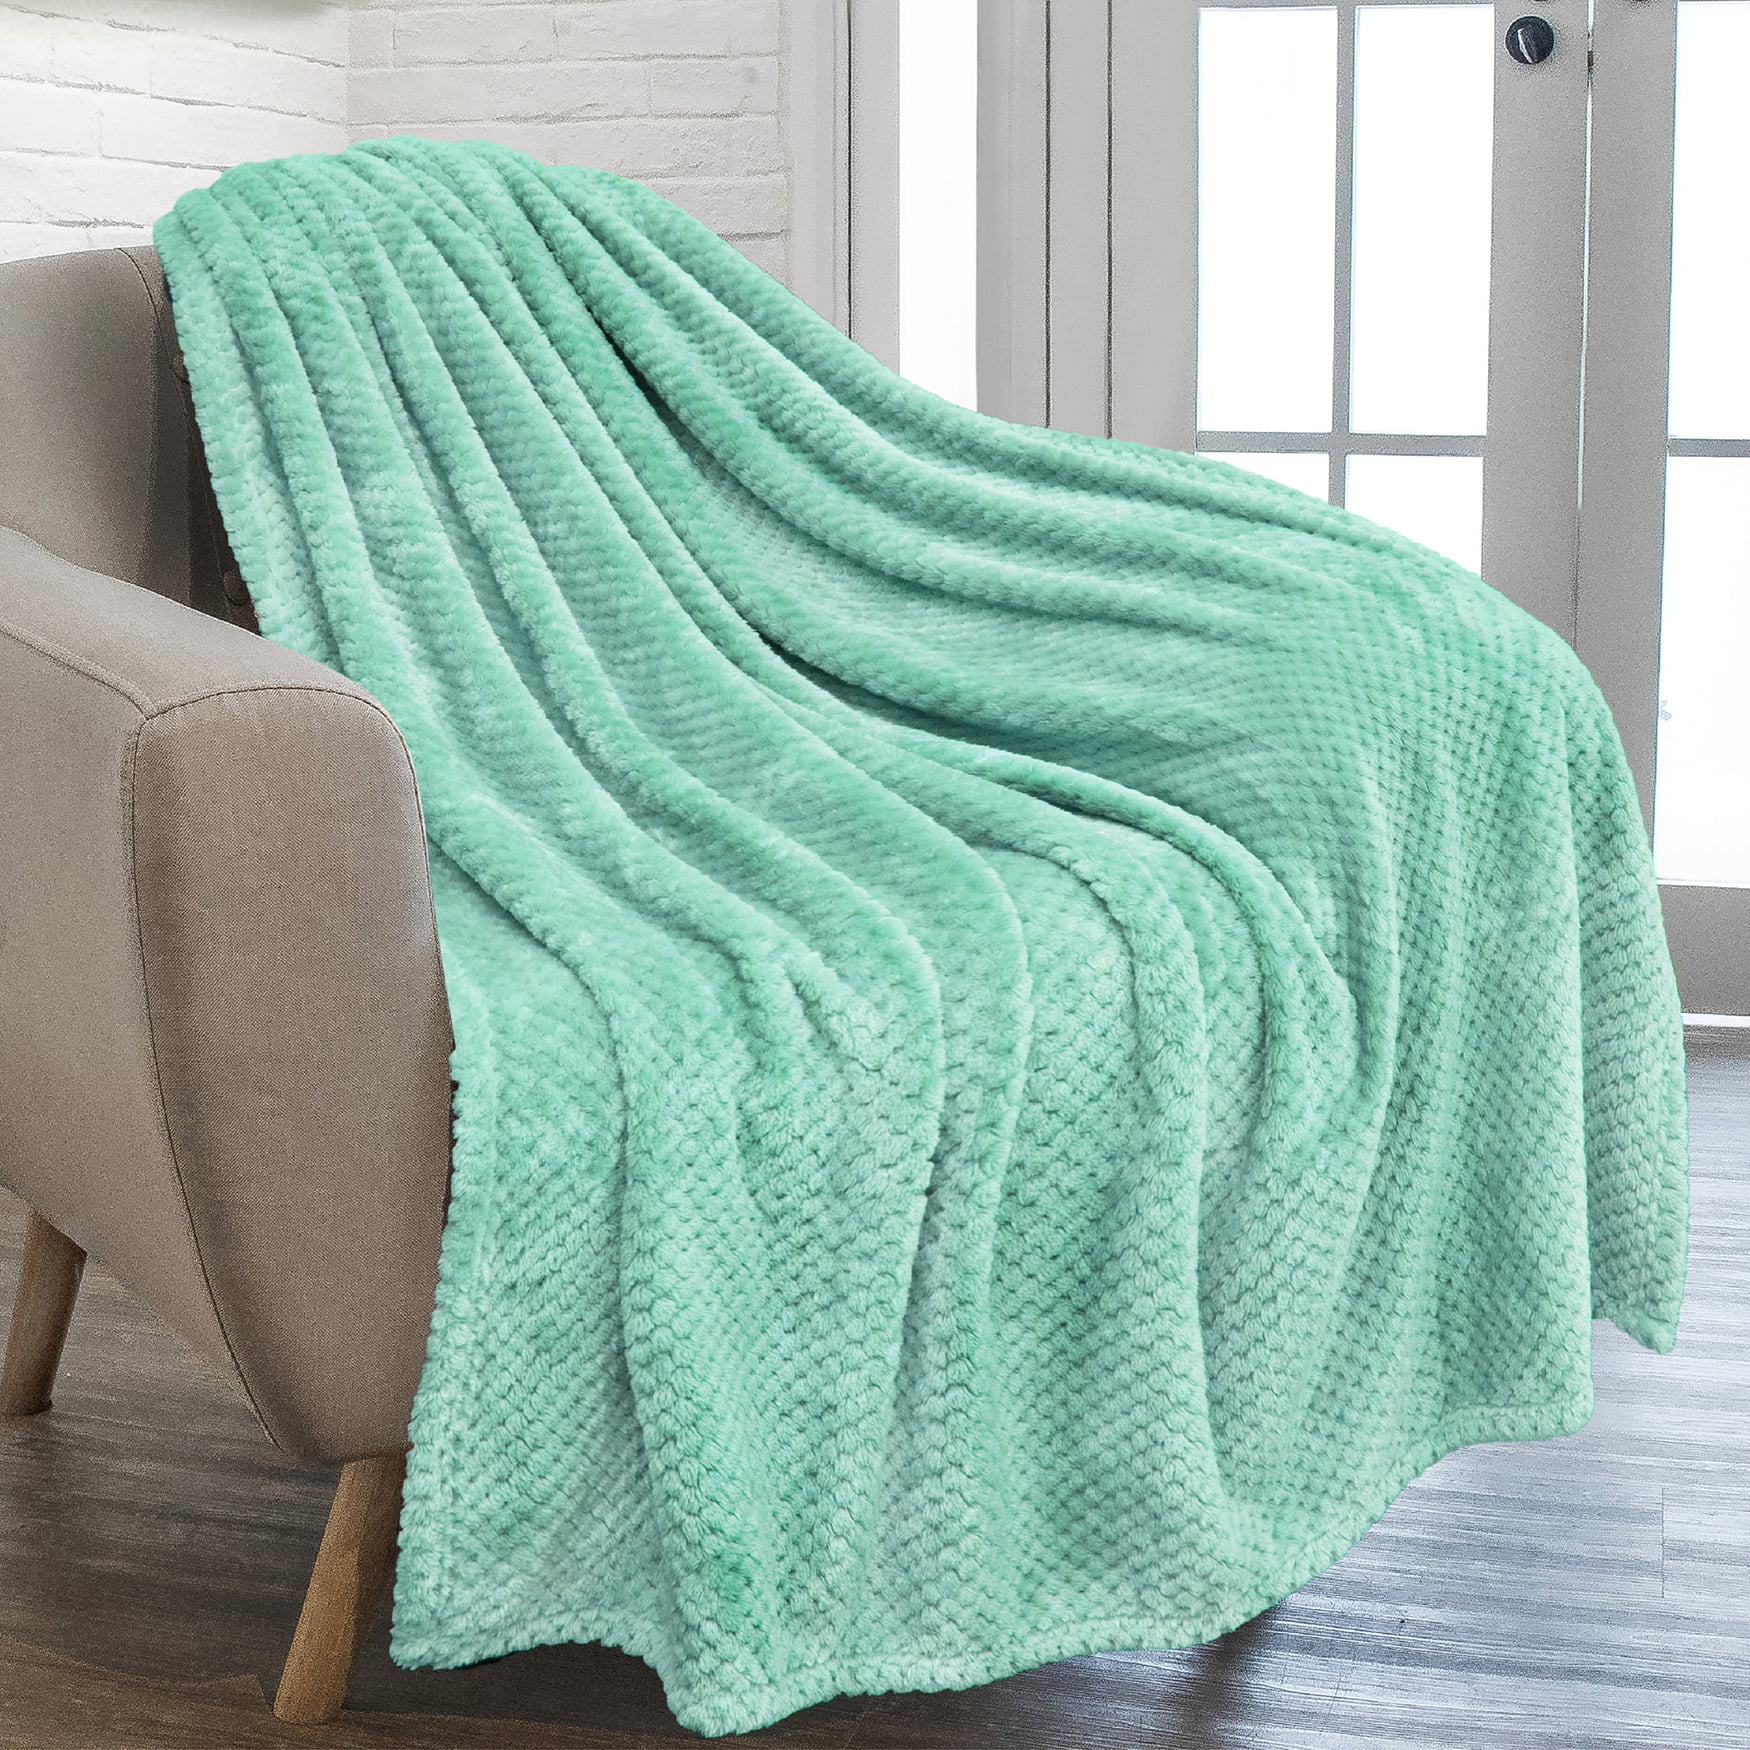 50 x 60 Inches xigua Candy Snowman Print Velvet Blanket Throw Size Luxury Bed Blanket Lightweight Fuzzy Soft Blanket Microfiber